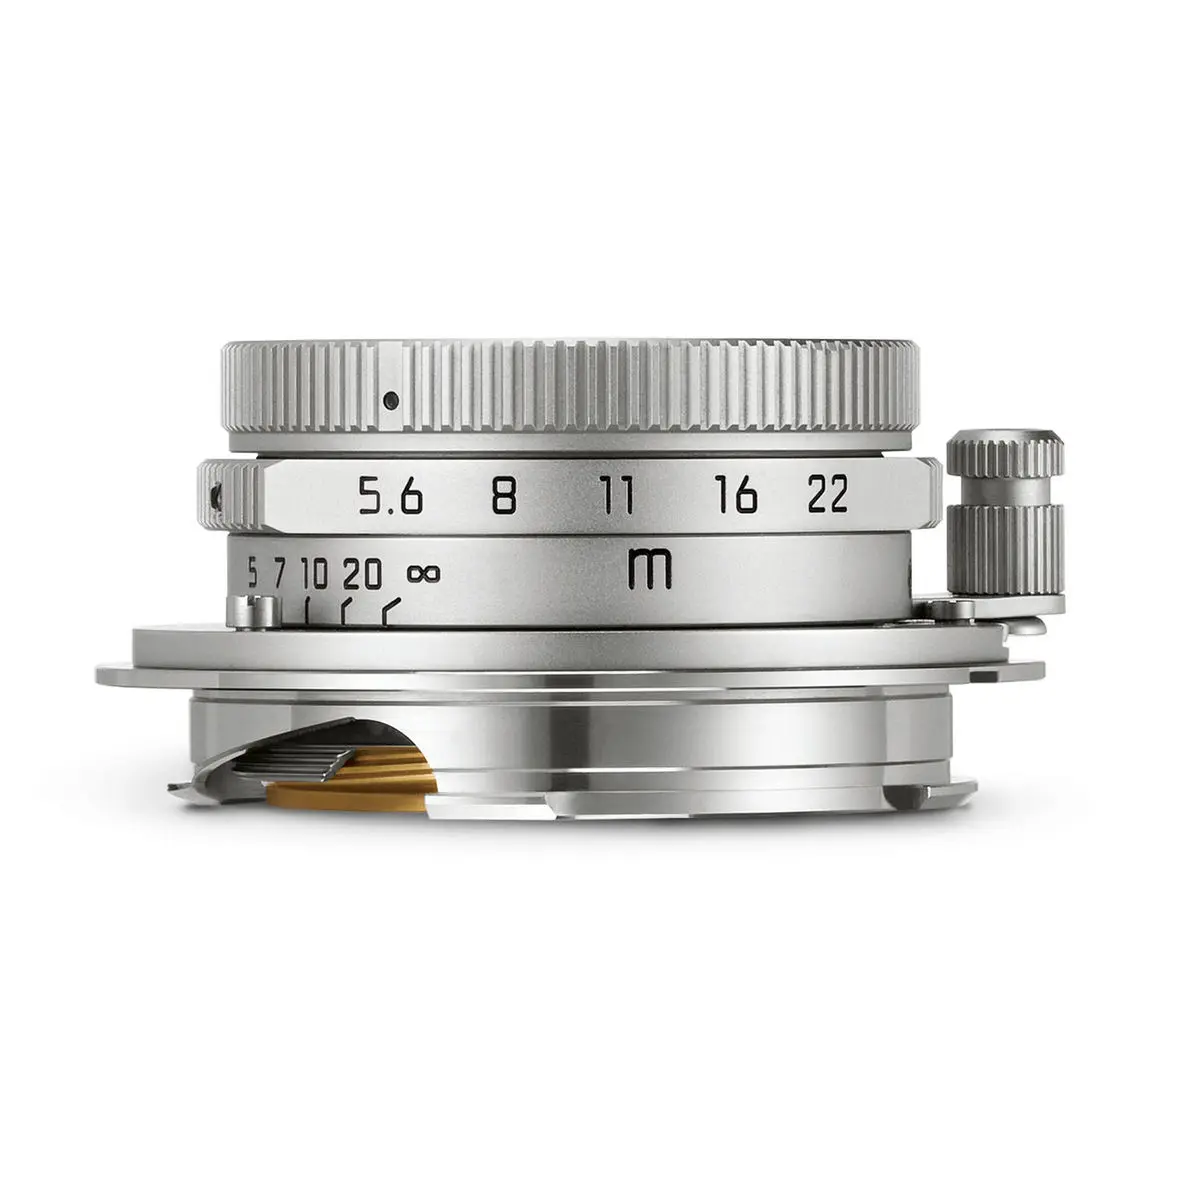 1. Leica Summaron-M 28mm F5.6 (11695) Lens